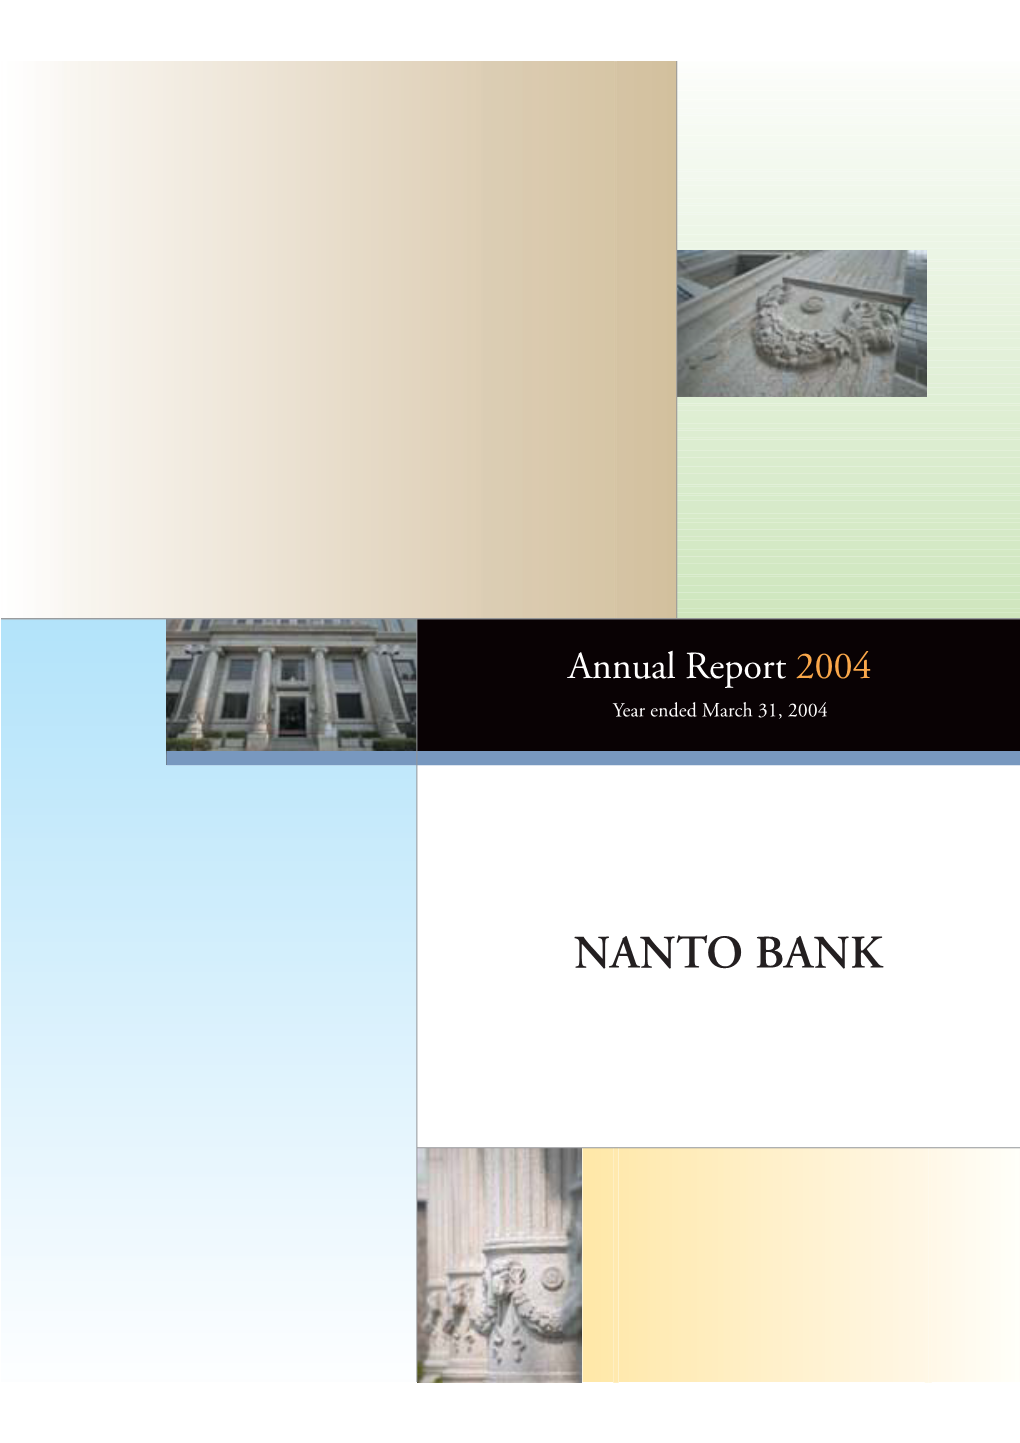 Nanto Bank Profile